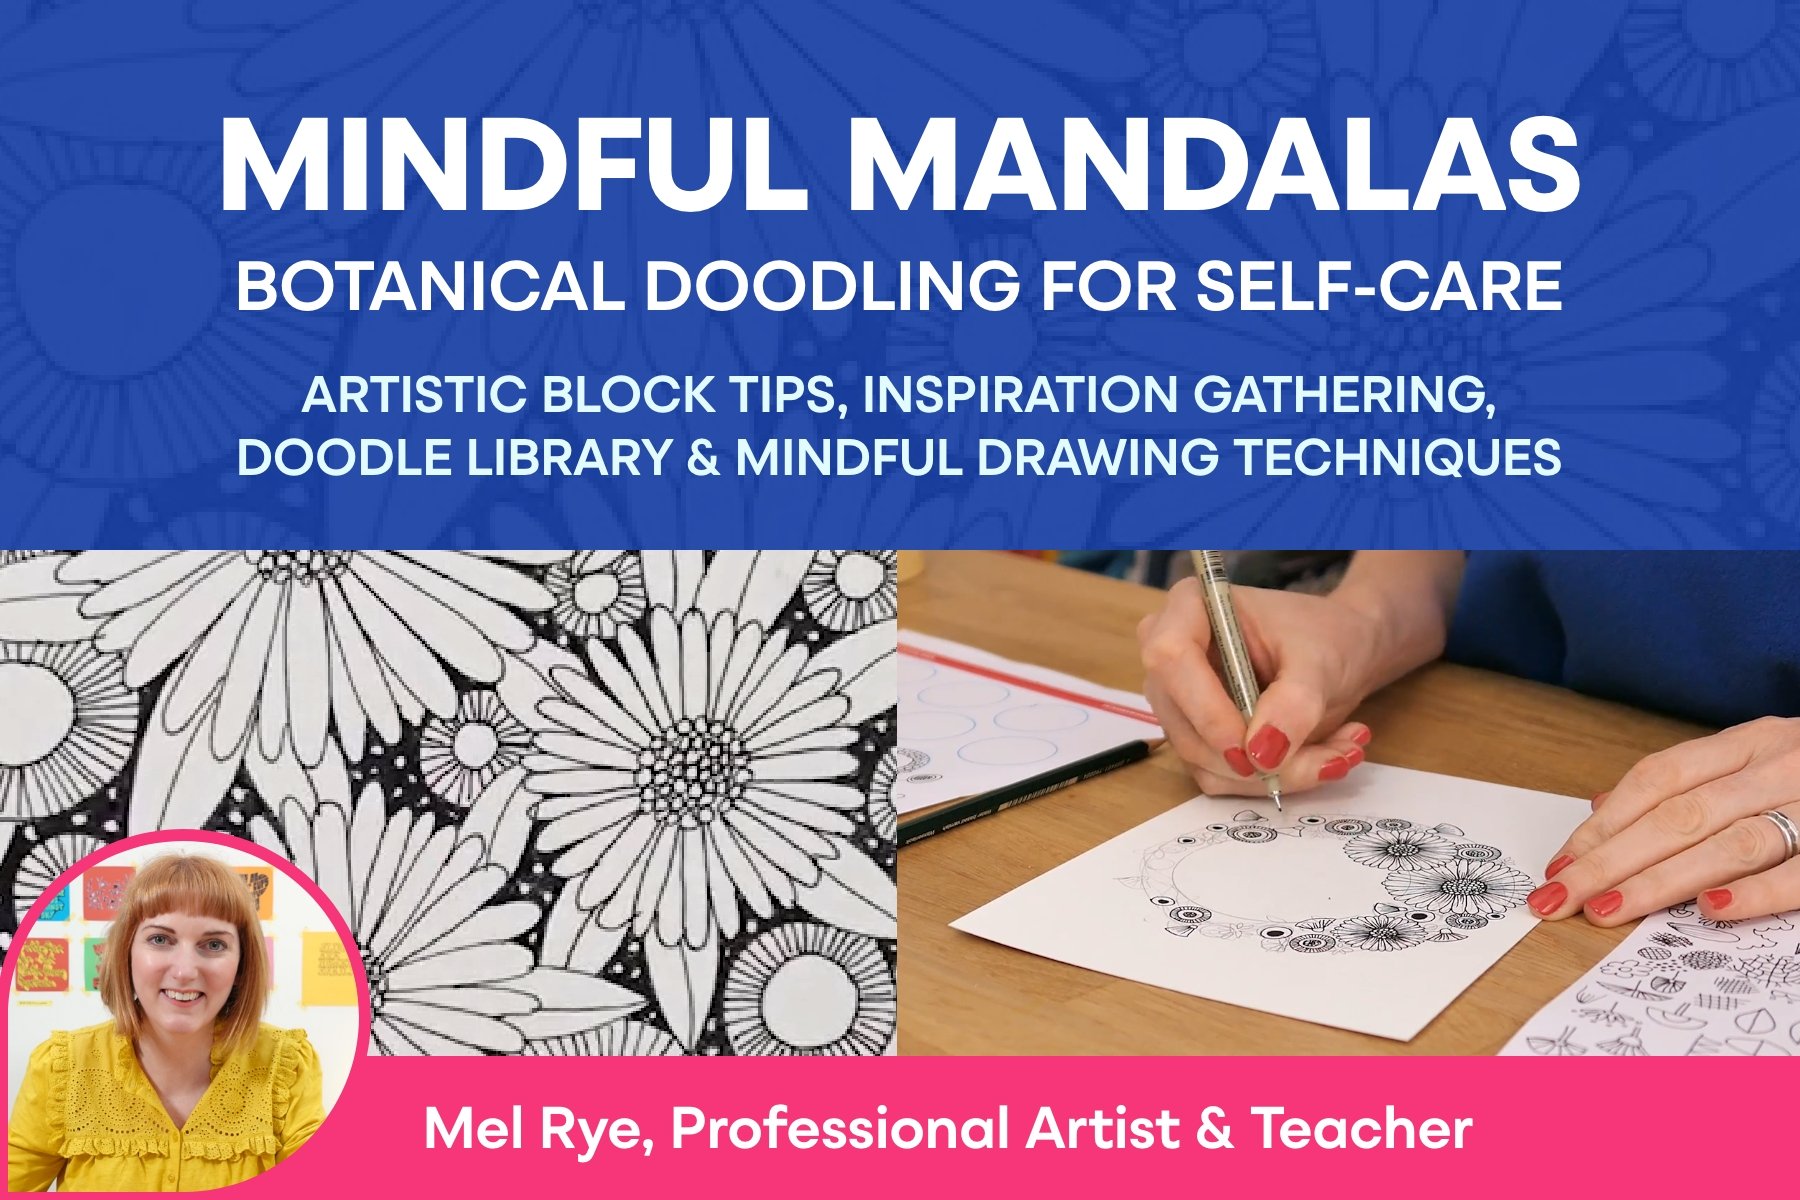 Mindful Mandalas: Botanical Doodling For Self-Care